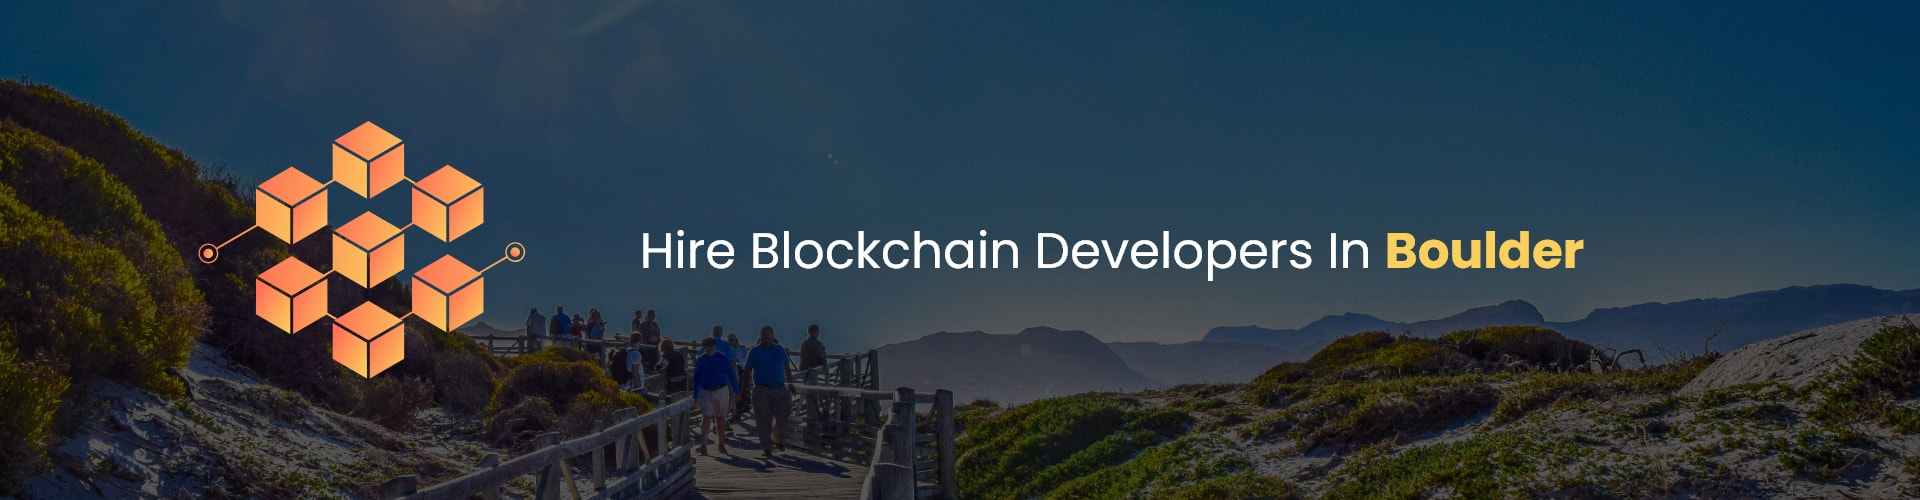 hire blockchain developers in boulder